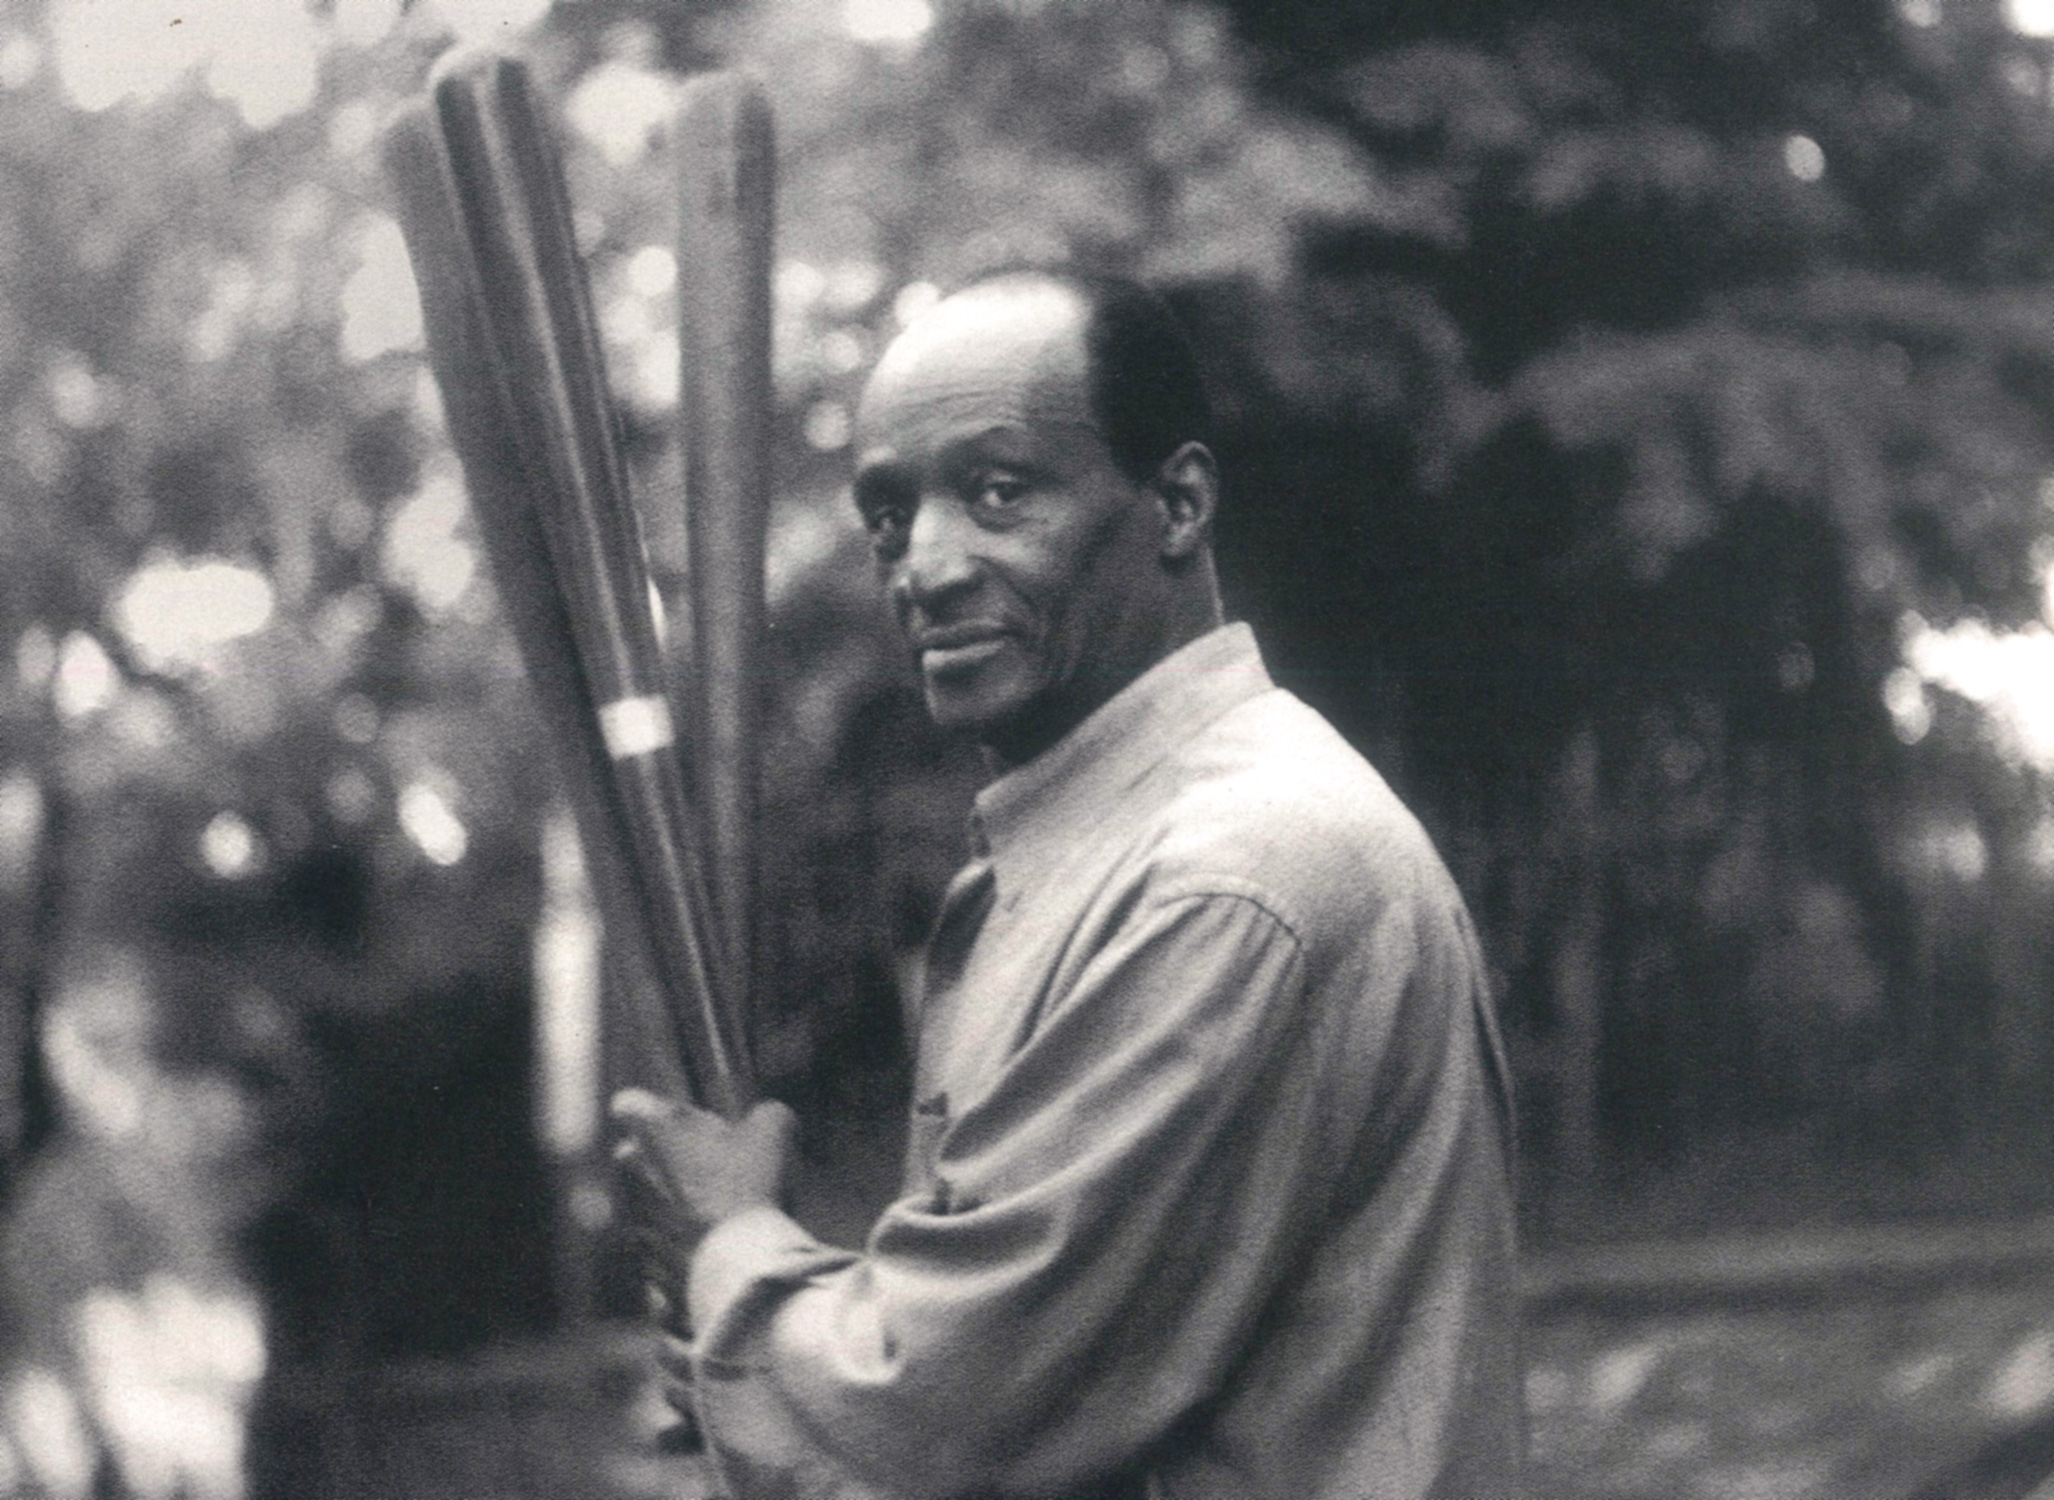 George Preston holding baseball bats, photographed by Daniella Zalcman